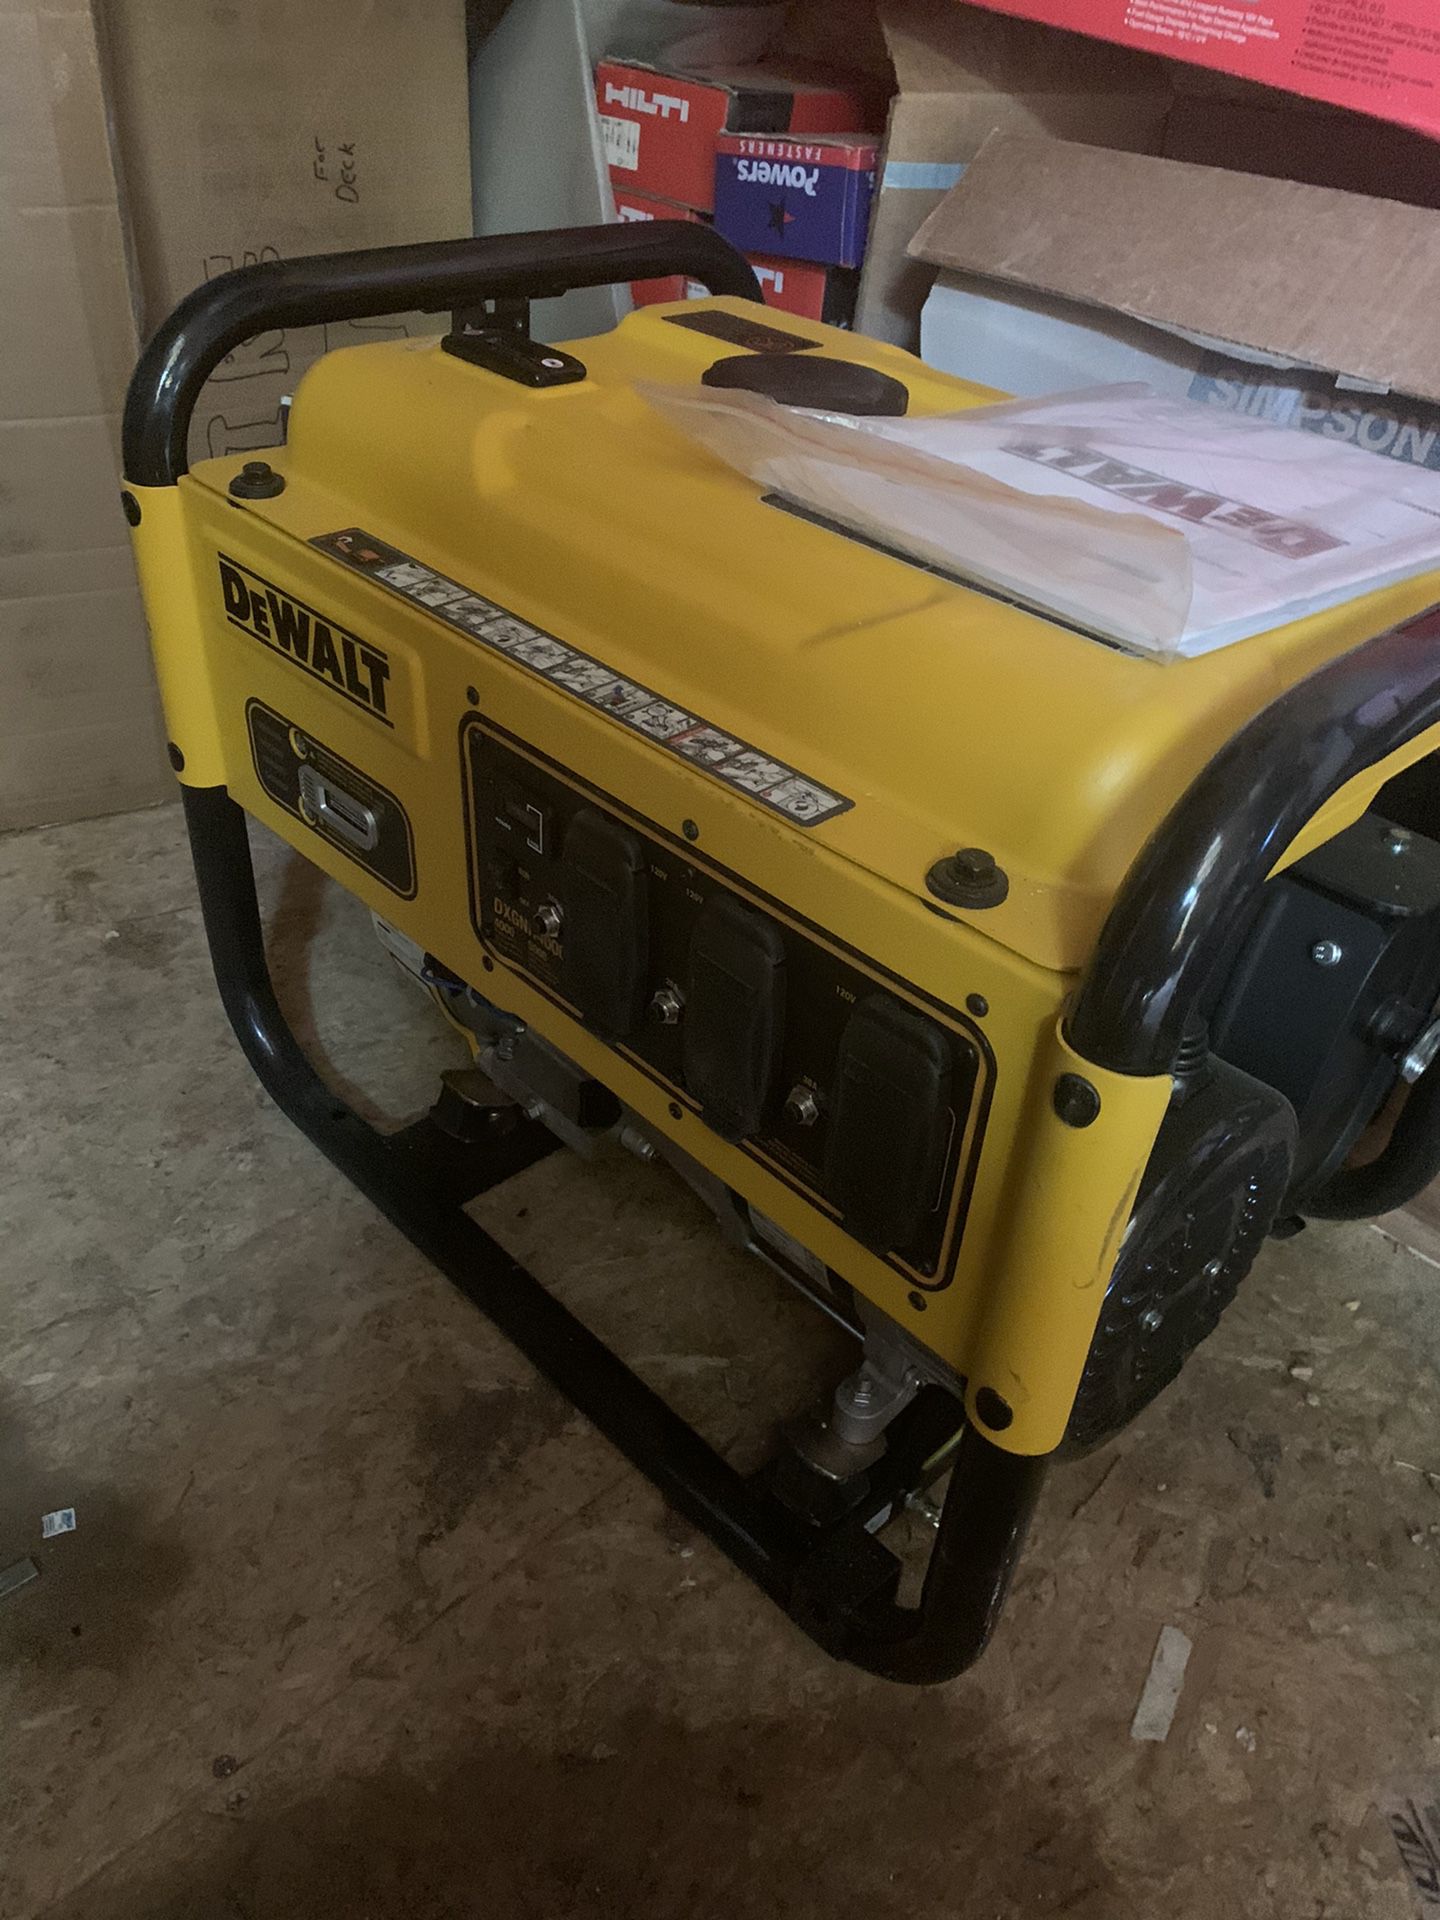 Dewalt DXGNR4000 generator new